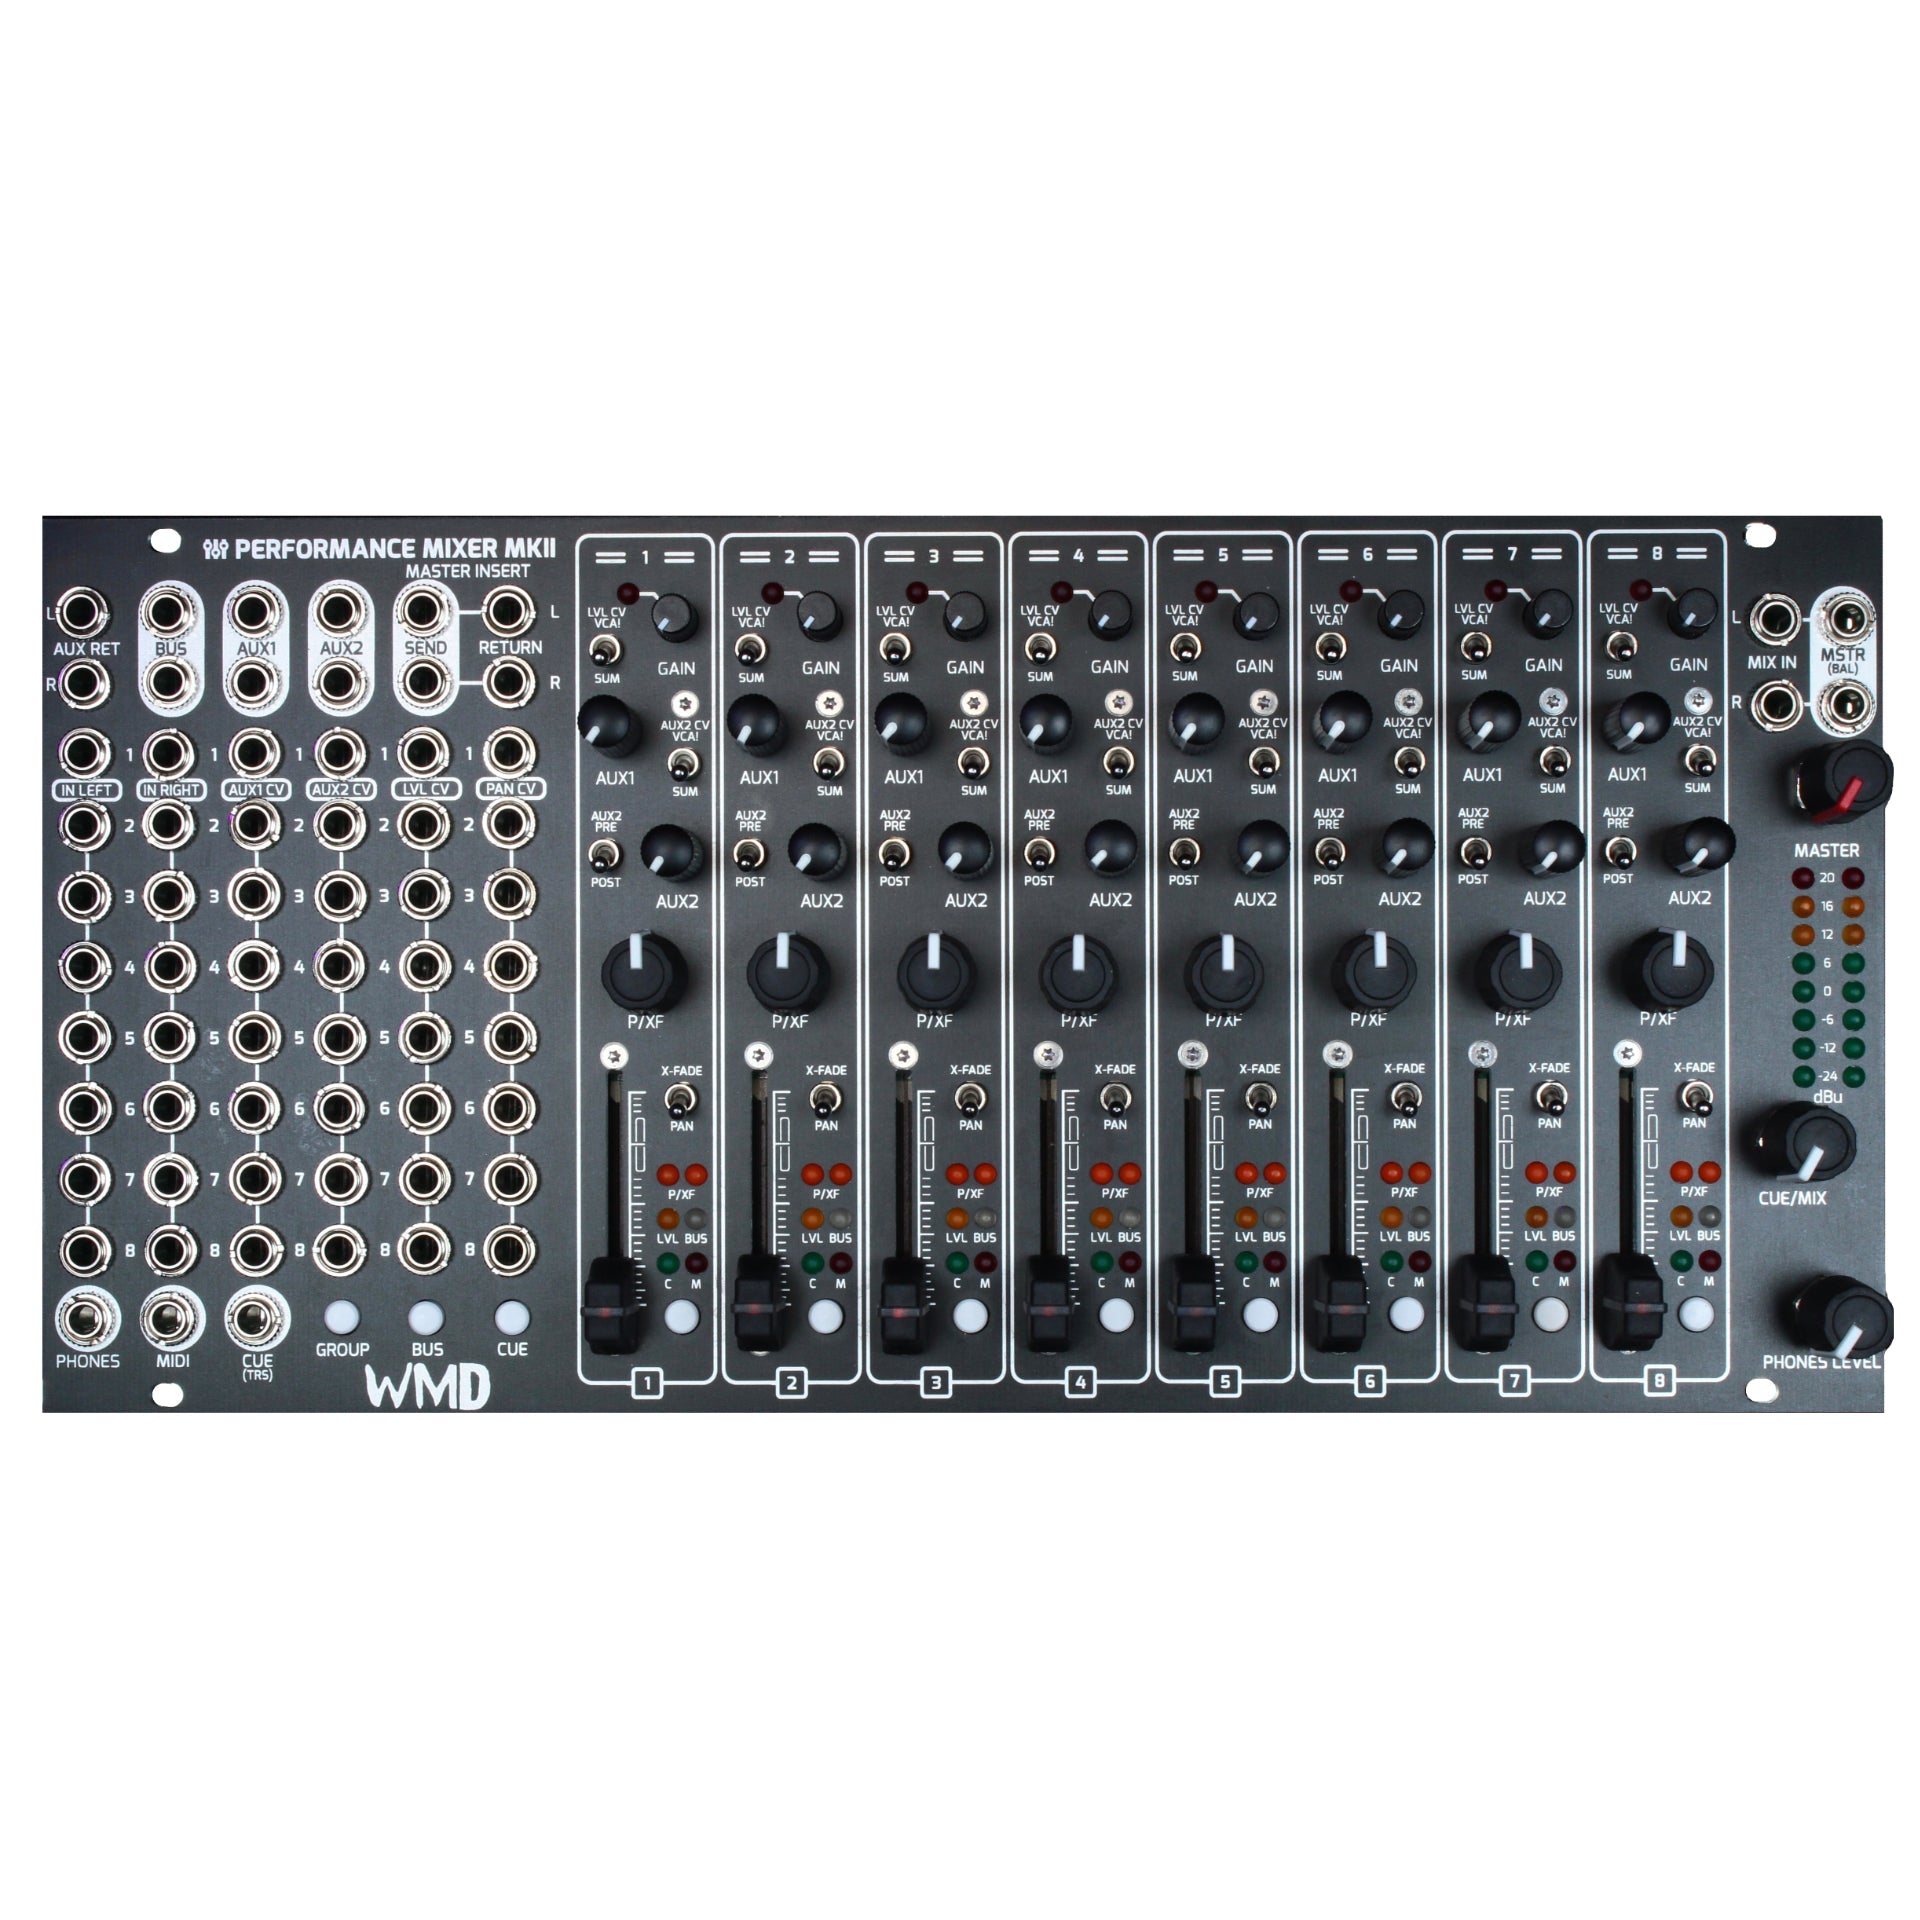 WMD - Module - Performance Mixer MKII - WMD - eurorack - mixer - performance